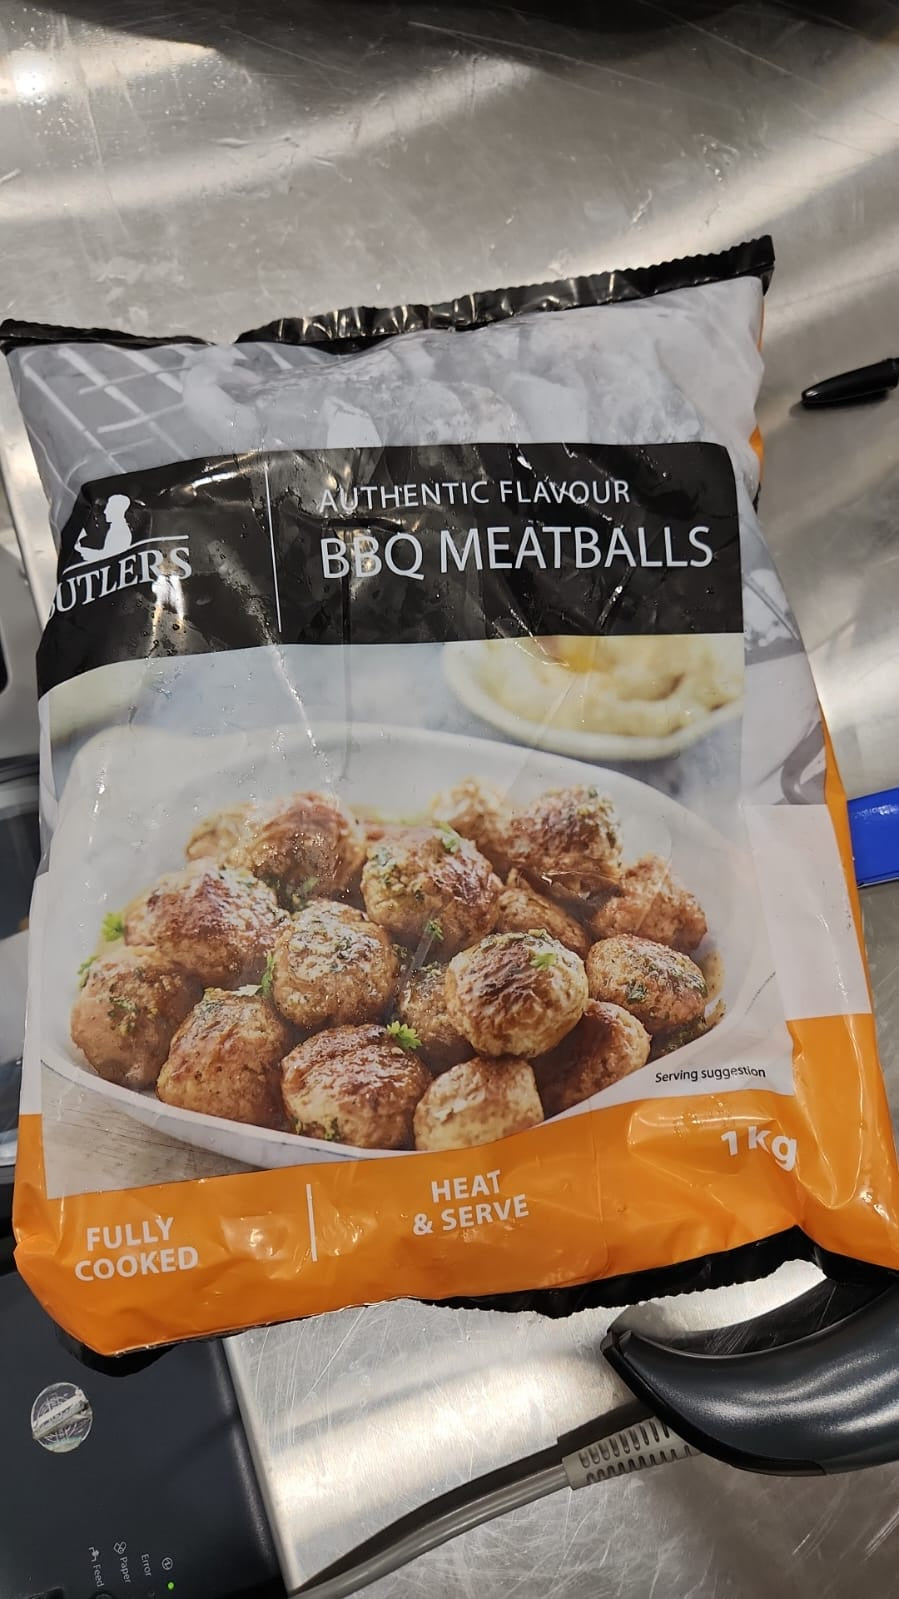 Butlers BBQ Meatballs 1kg